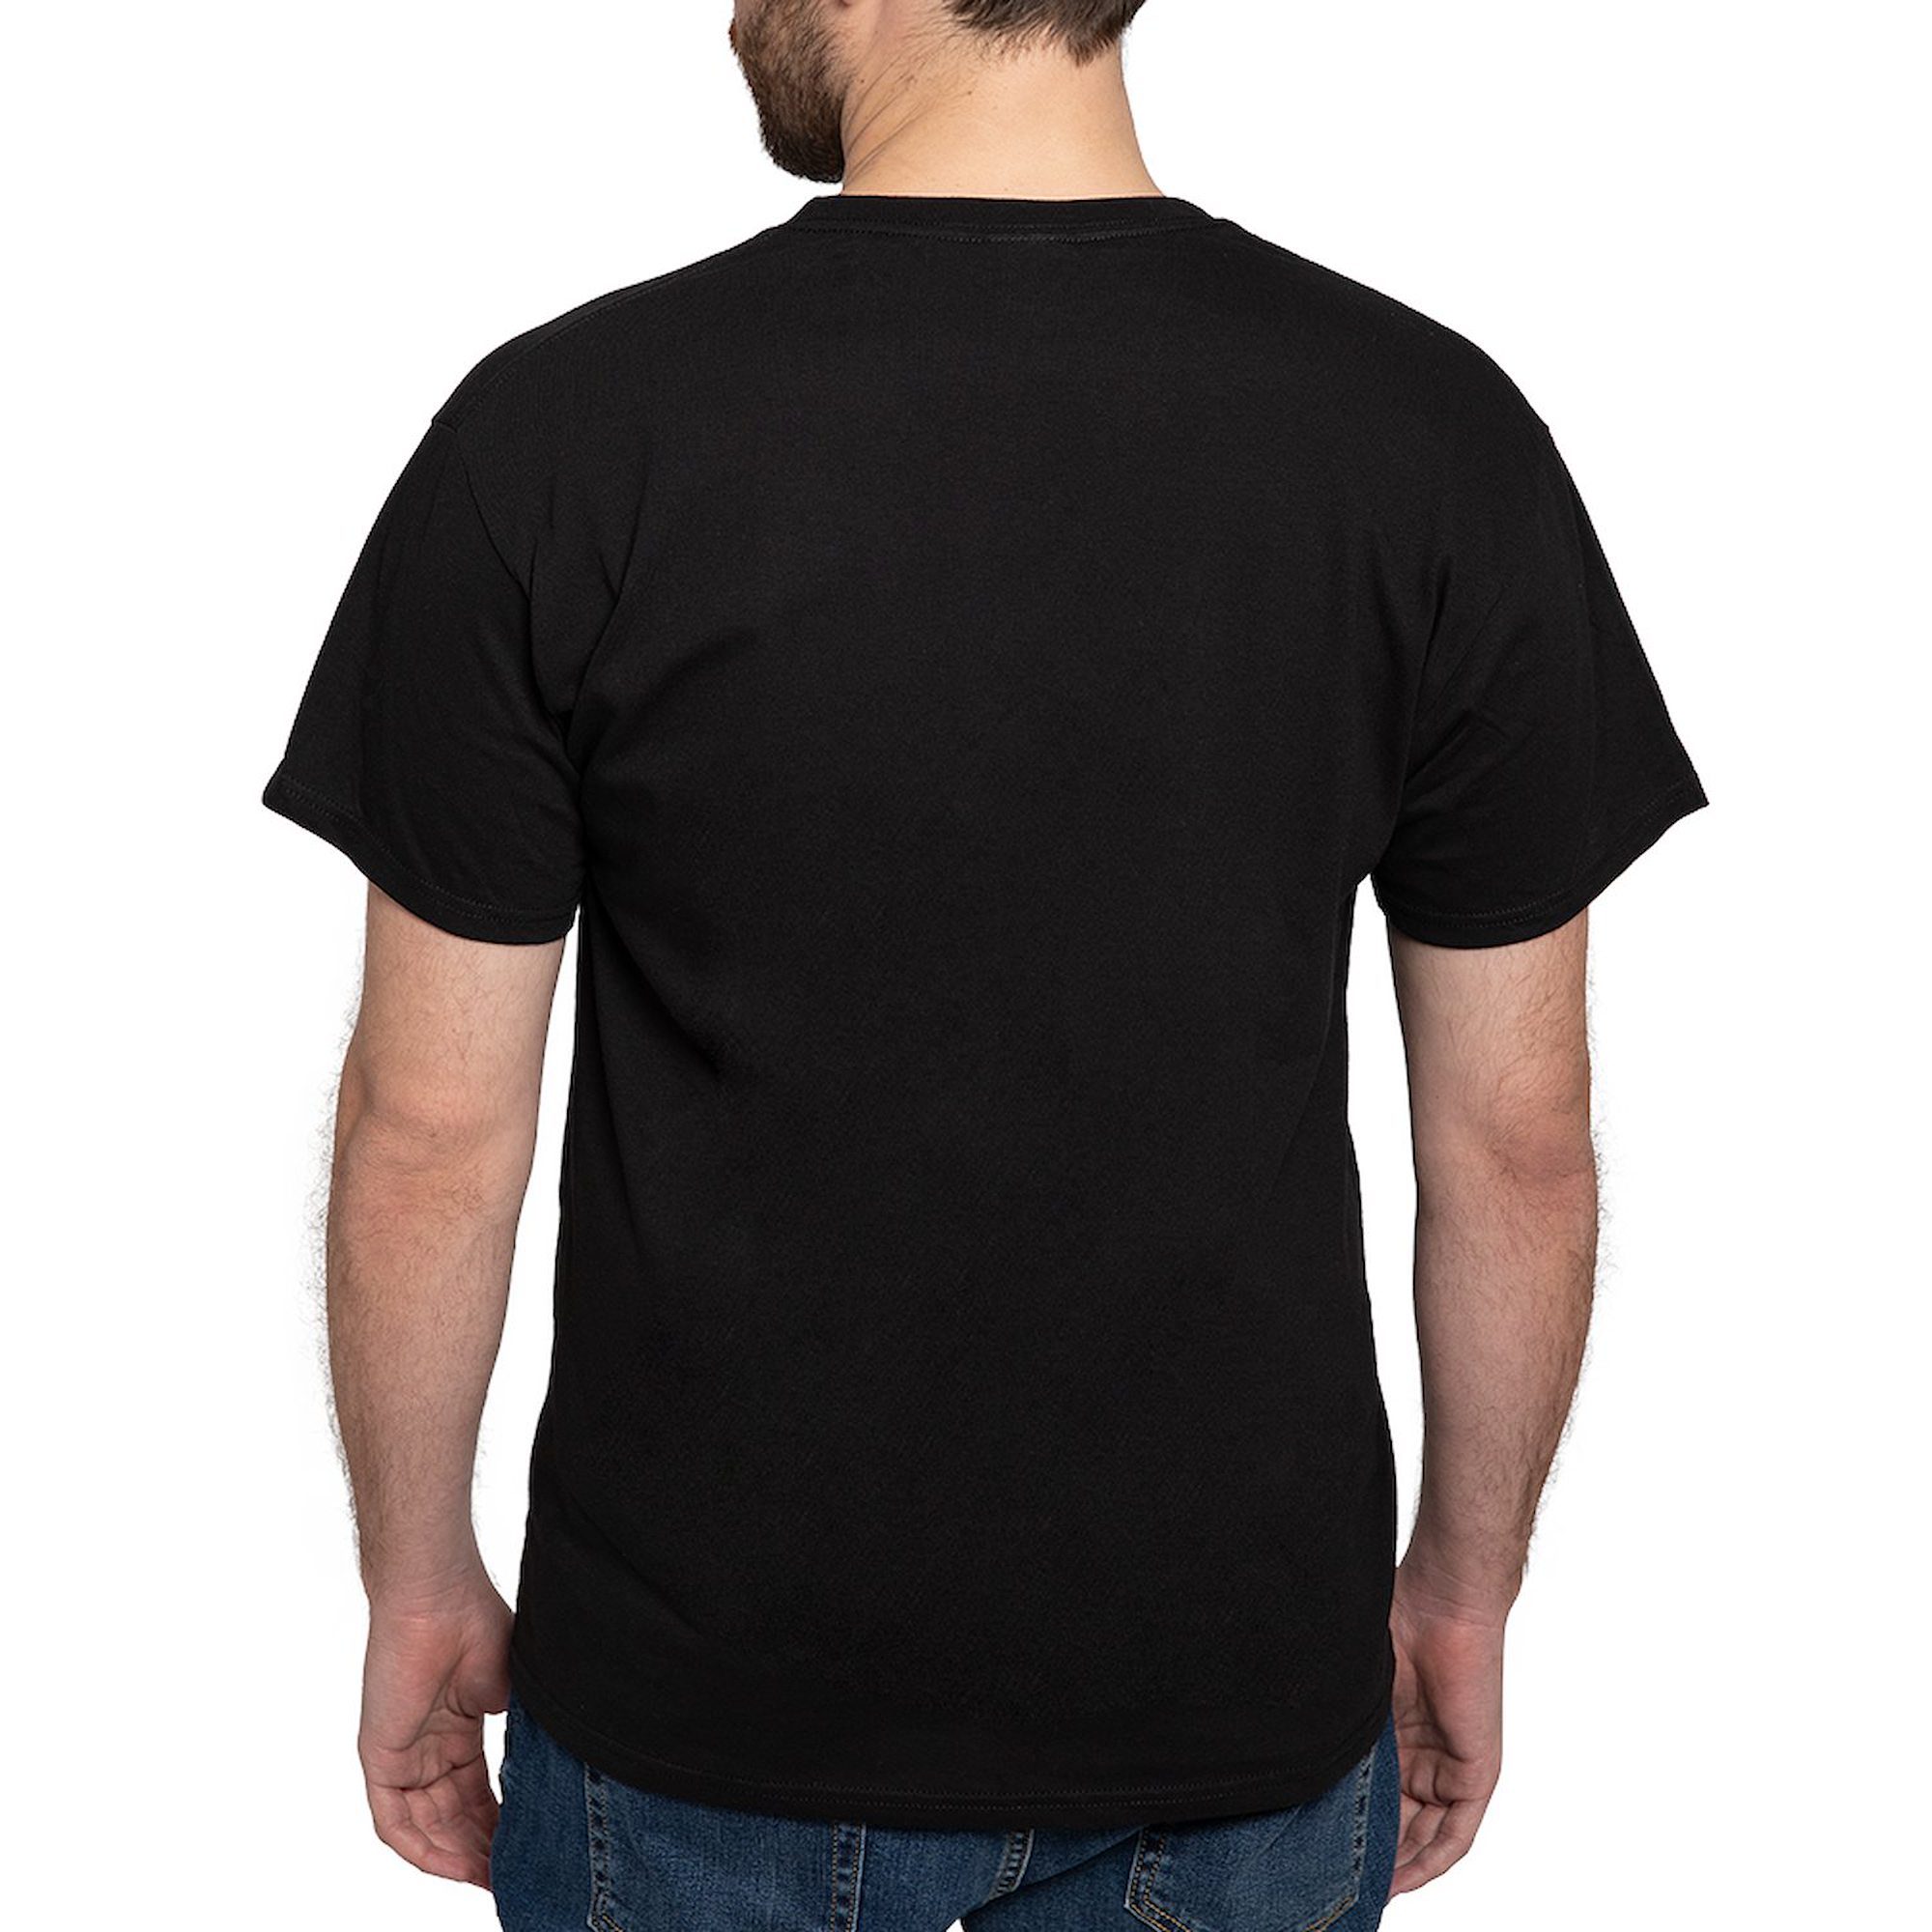 CafePress - I Heart My Wife Dark T Shirt - 100% Cotton T-Shirt - image 2 of 4